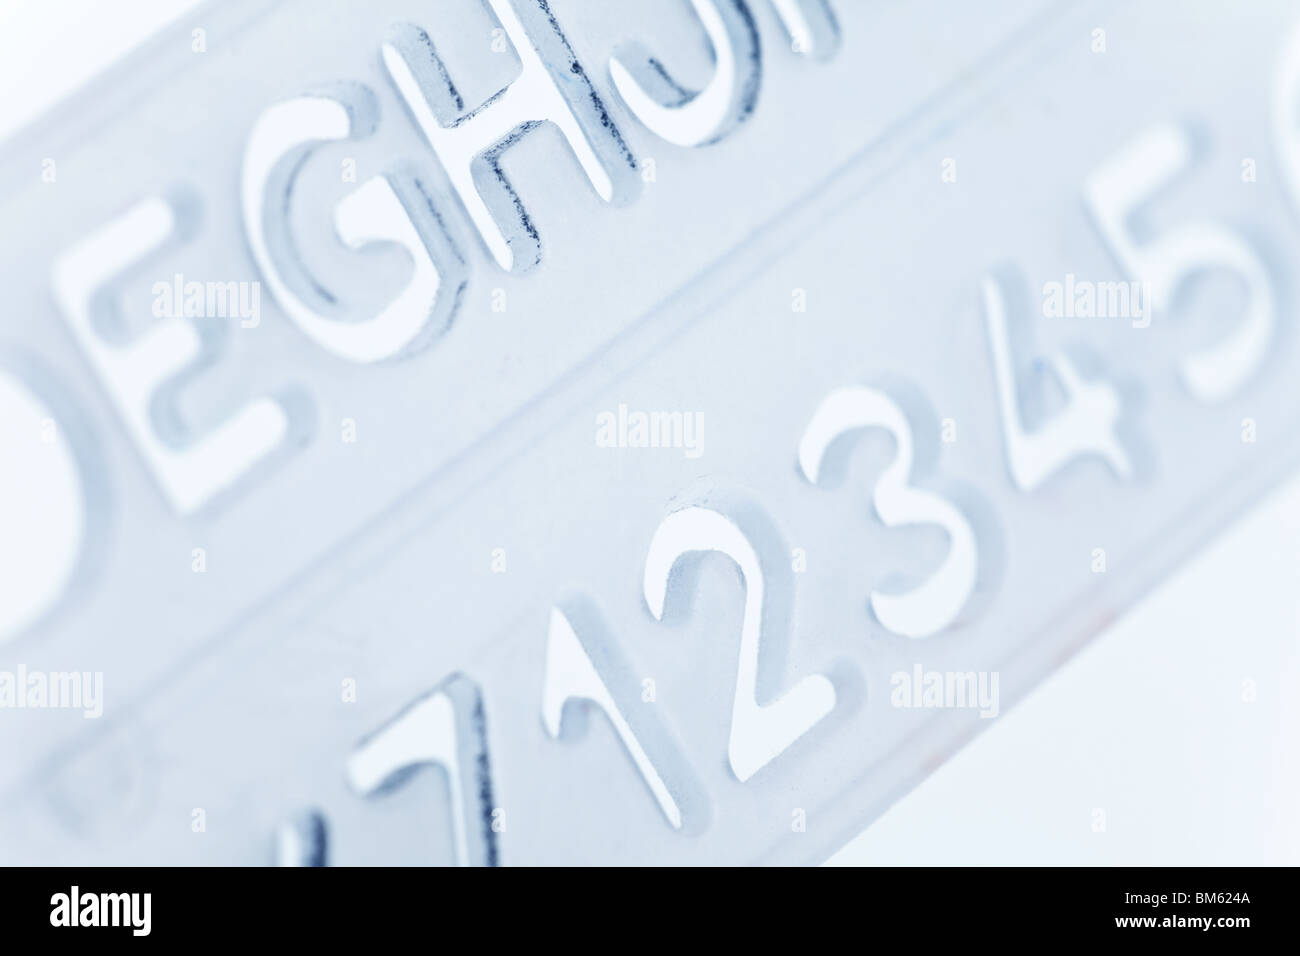 stencil ruler, alphabet, number close up Stock Photo